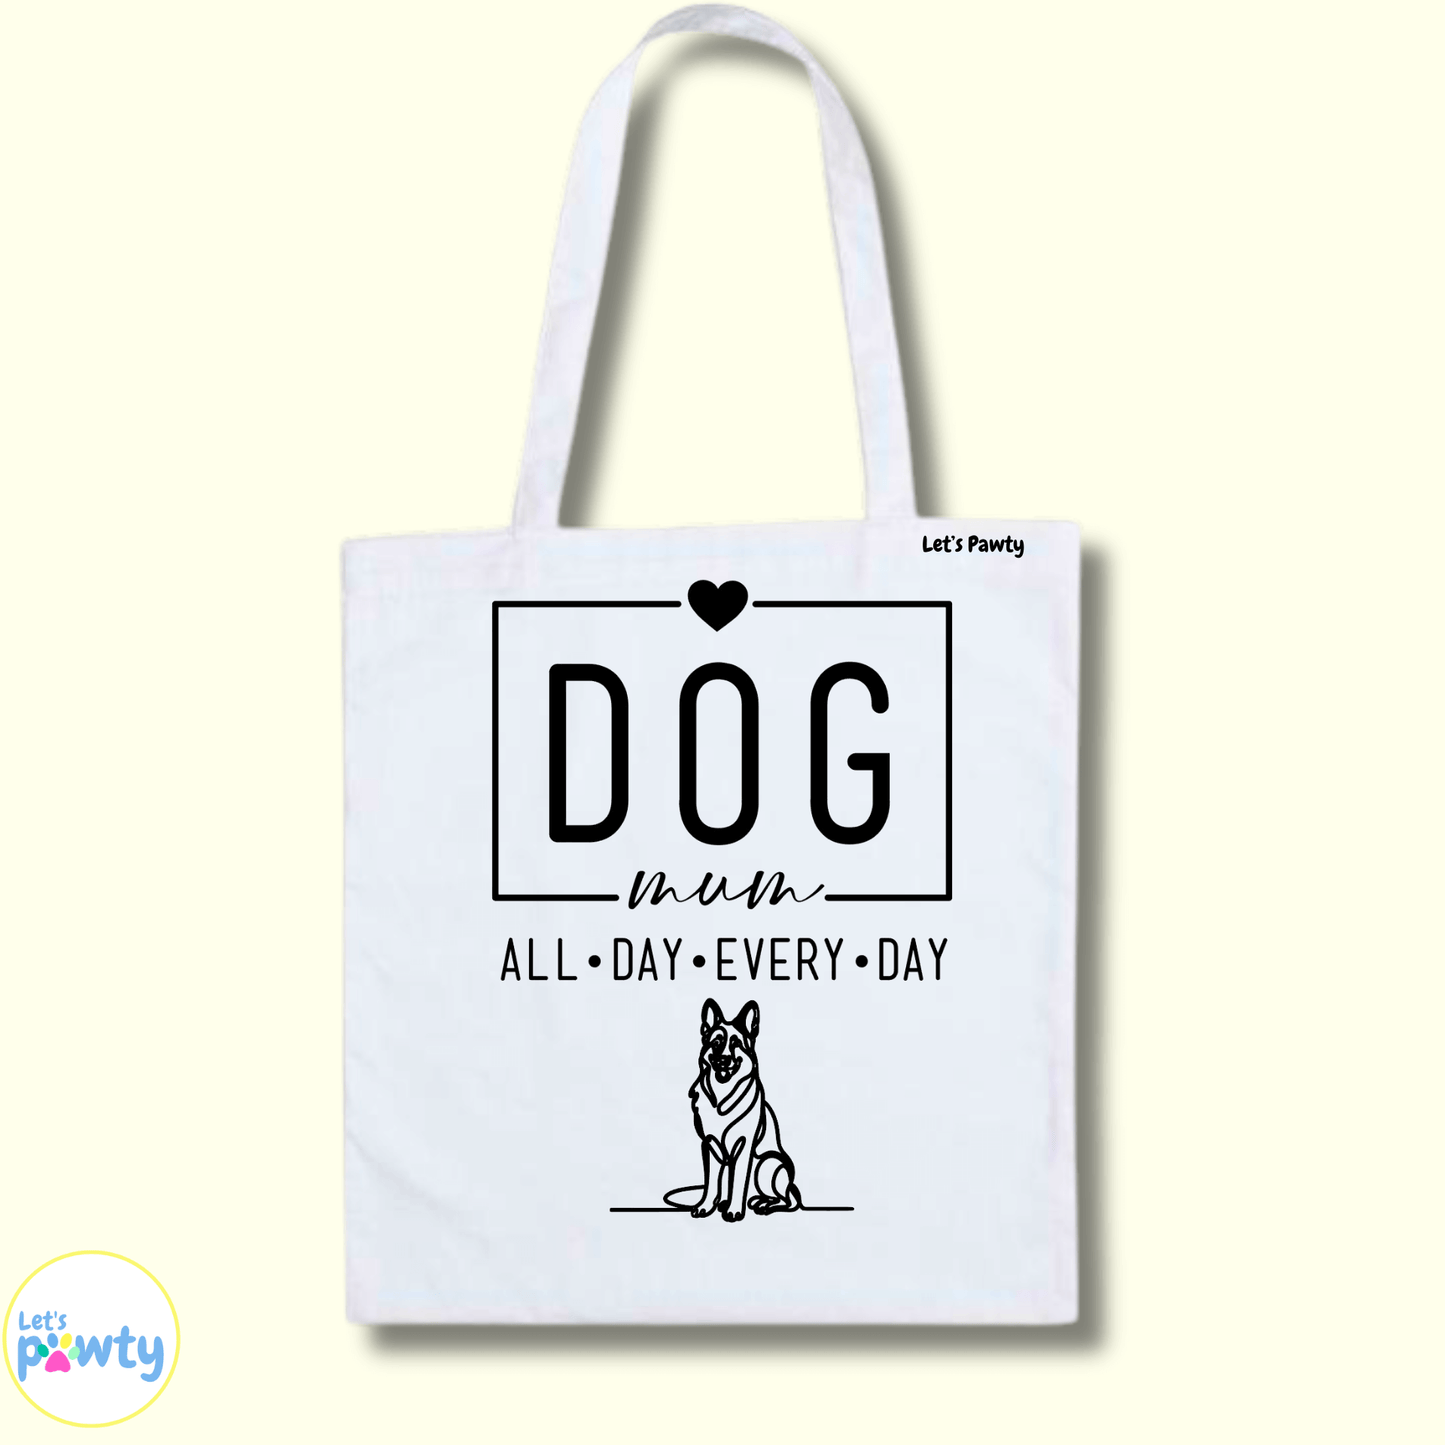 German shepherd dog mum tote bag